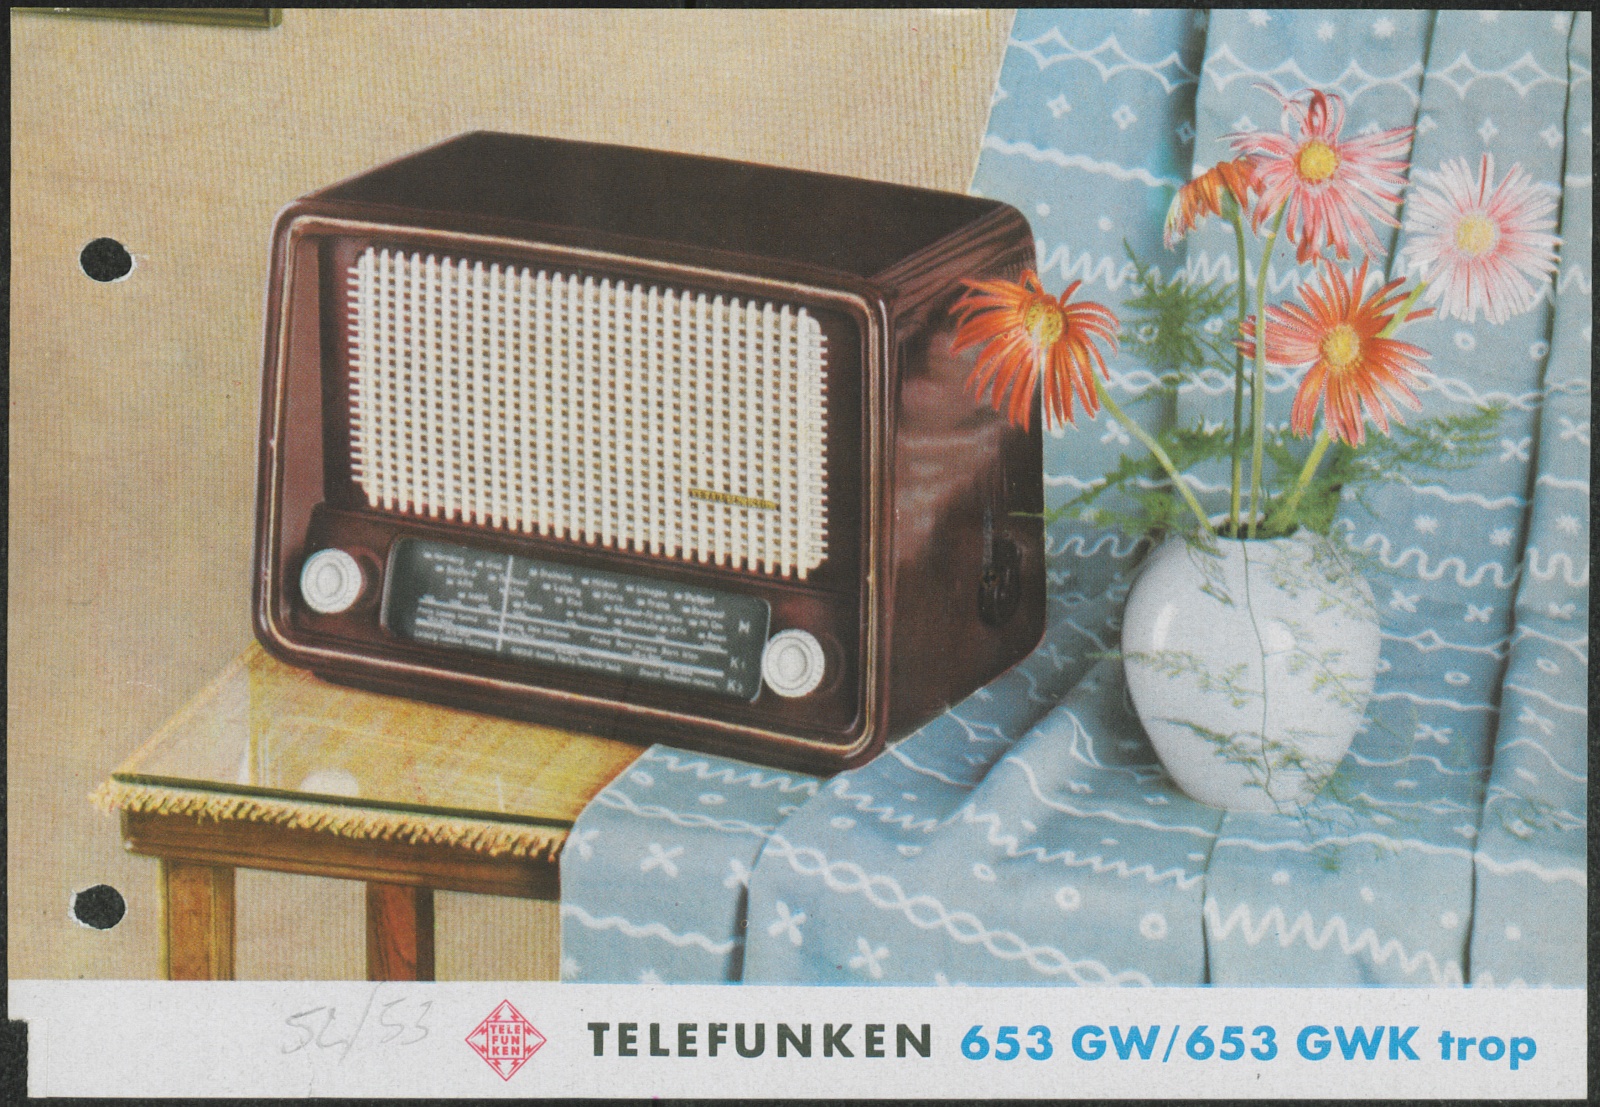 Werbeprospekt: Telefunken 653 GW / 653 GWK trop (Stiftung Deutsches Technikmuseum Berlin CC0)